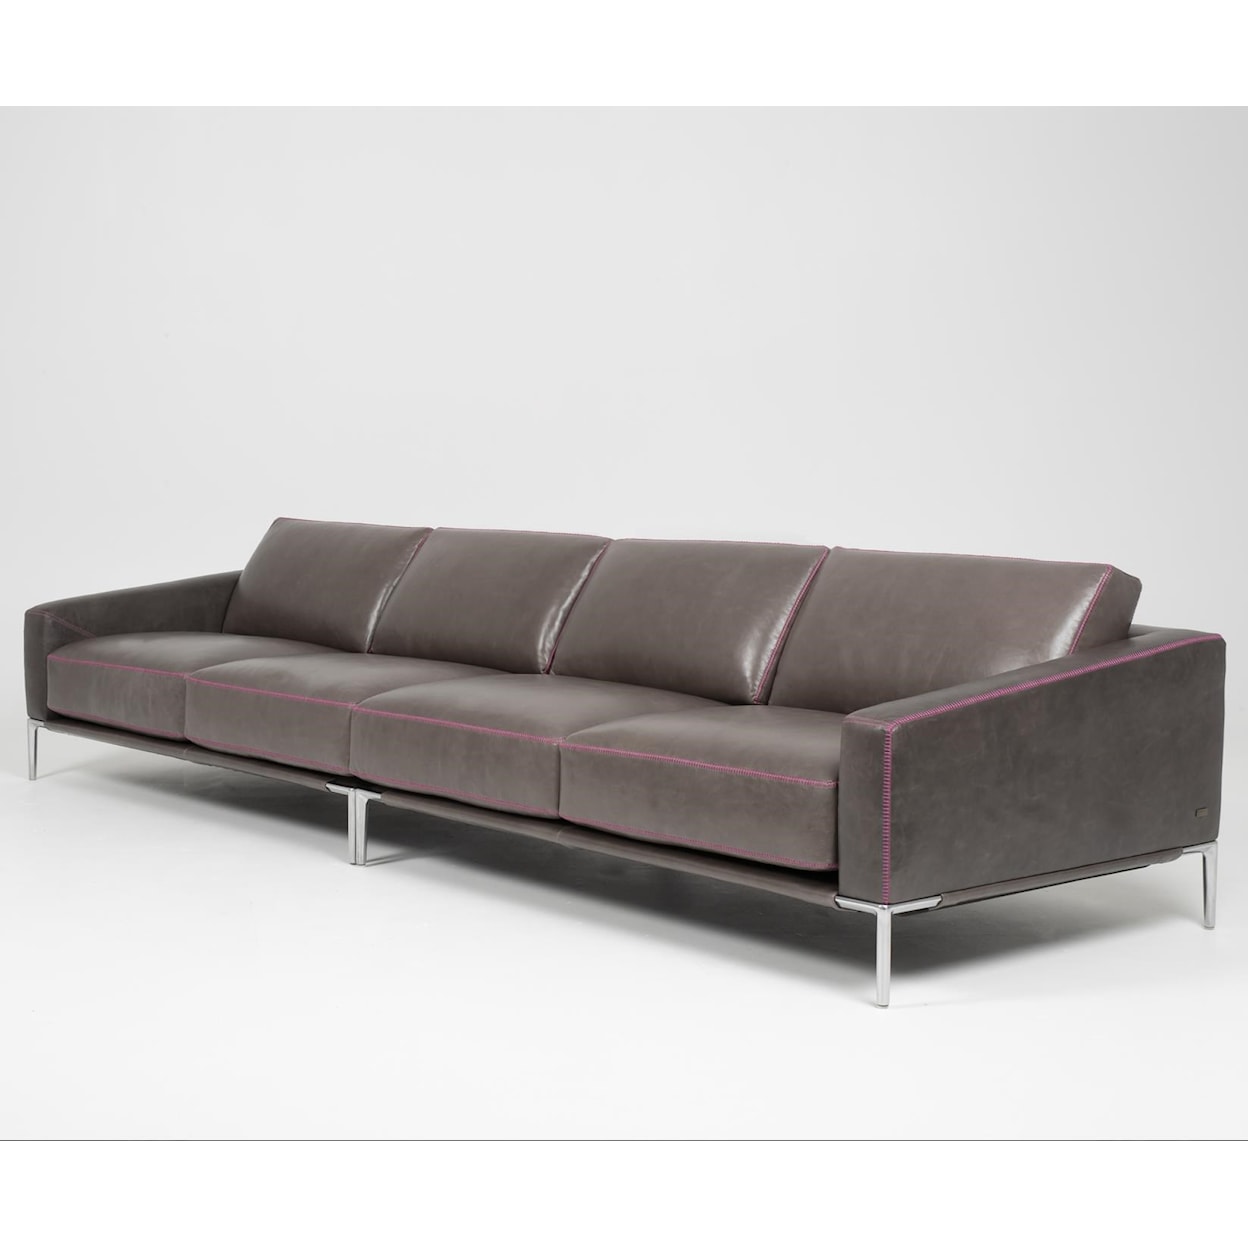 American Leather Sydney 4-Seat Sofa